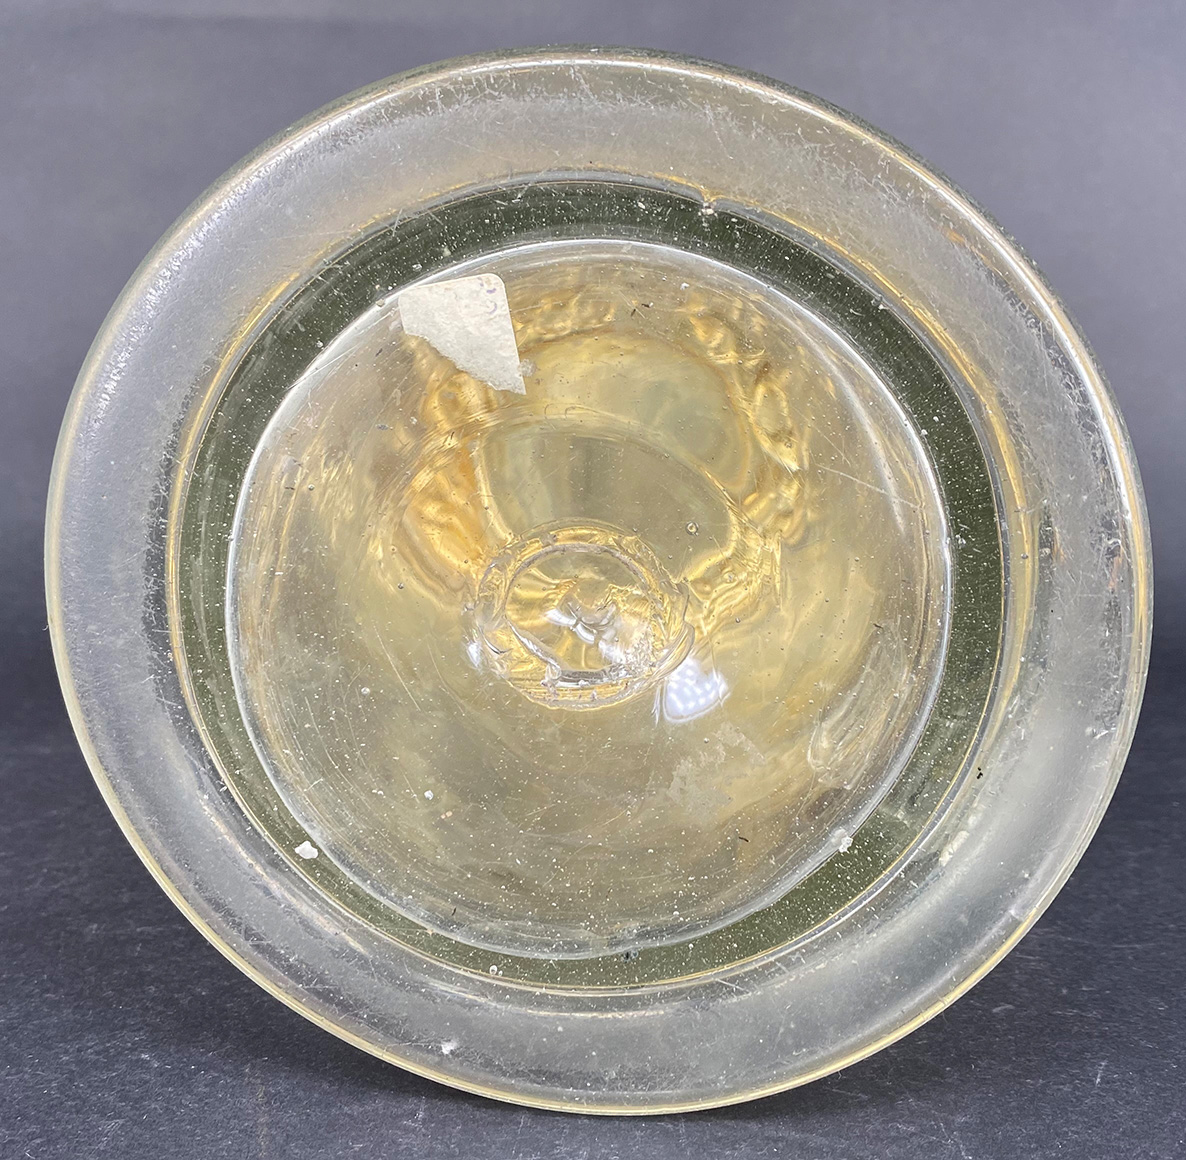 Barocker Walzenkrug, 18. Jh., Glaskrug mit Silberdeckel, innen vergoldet: zylindrischer, farbloser - Image 7 of 10